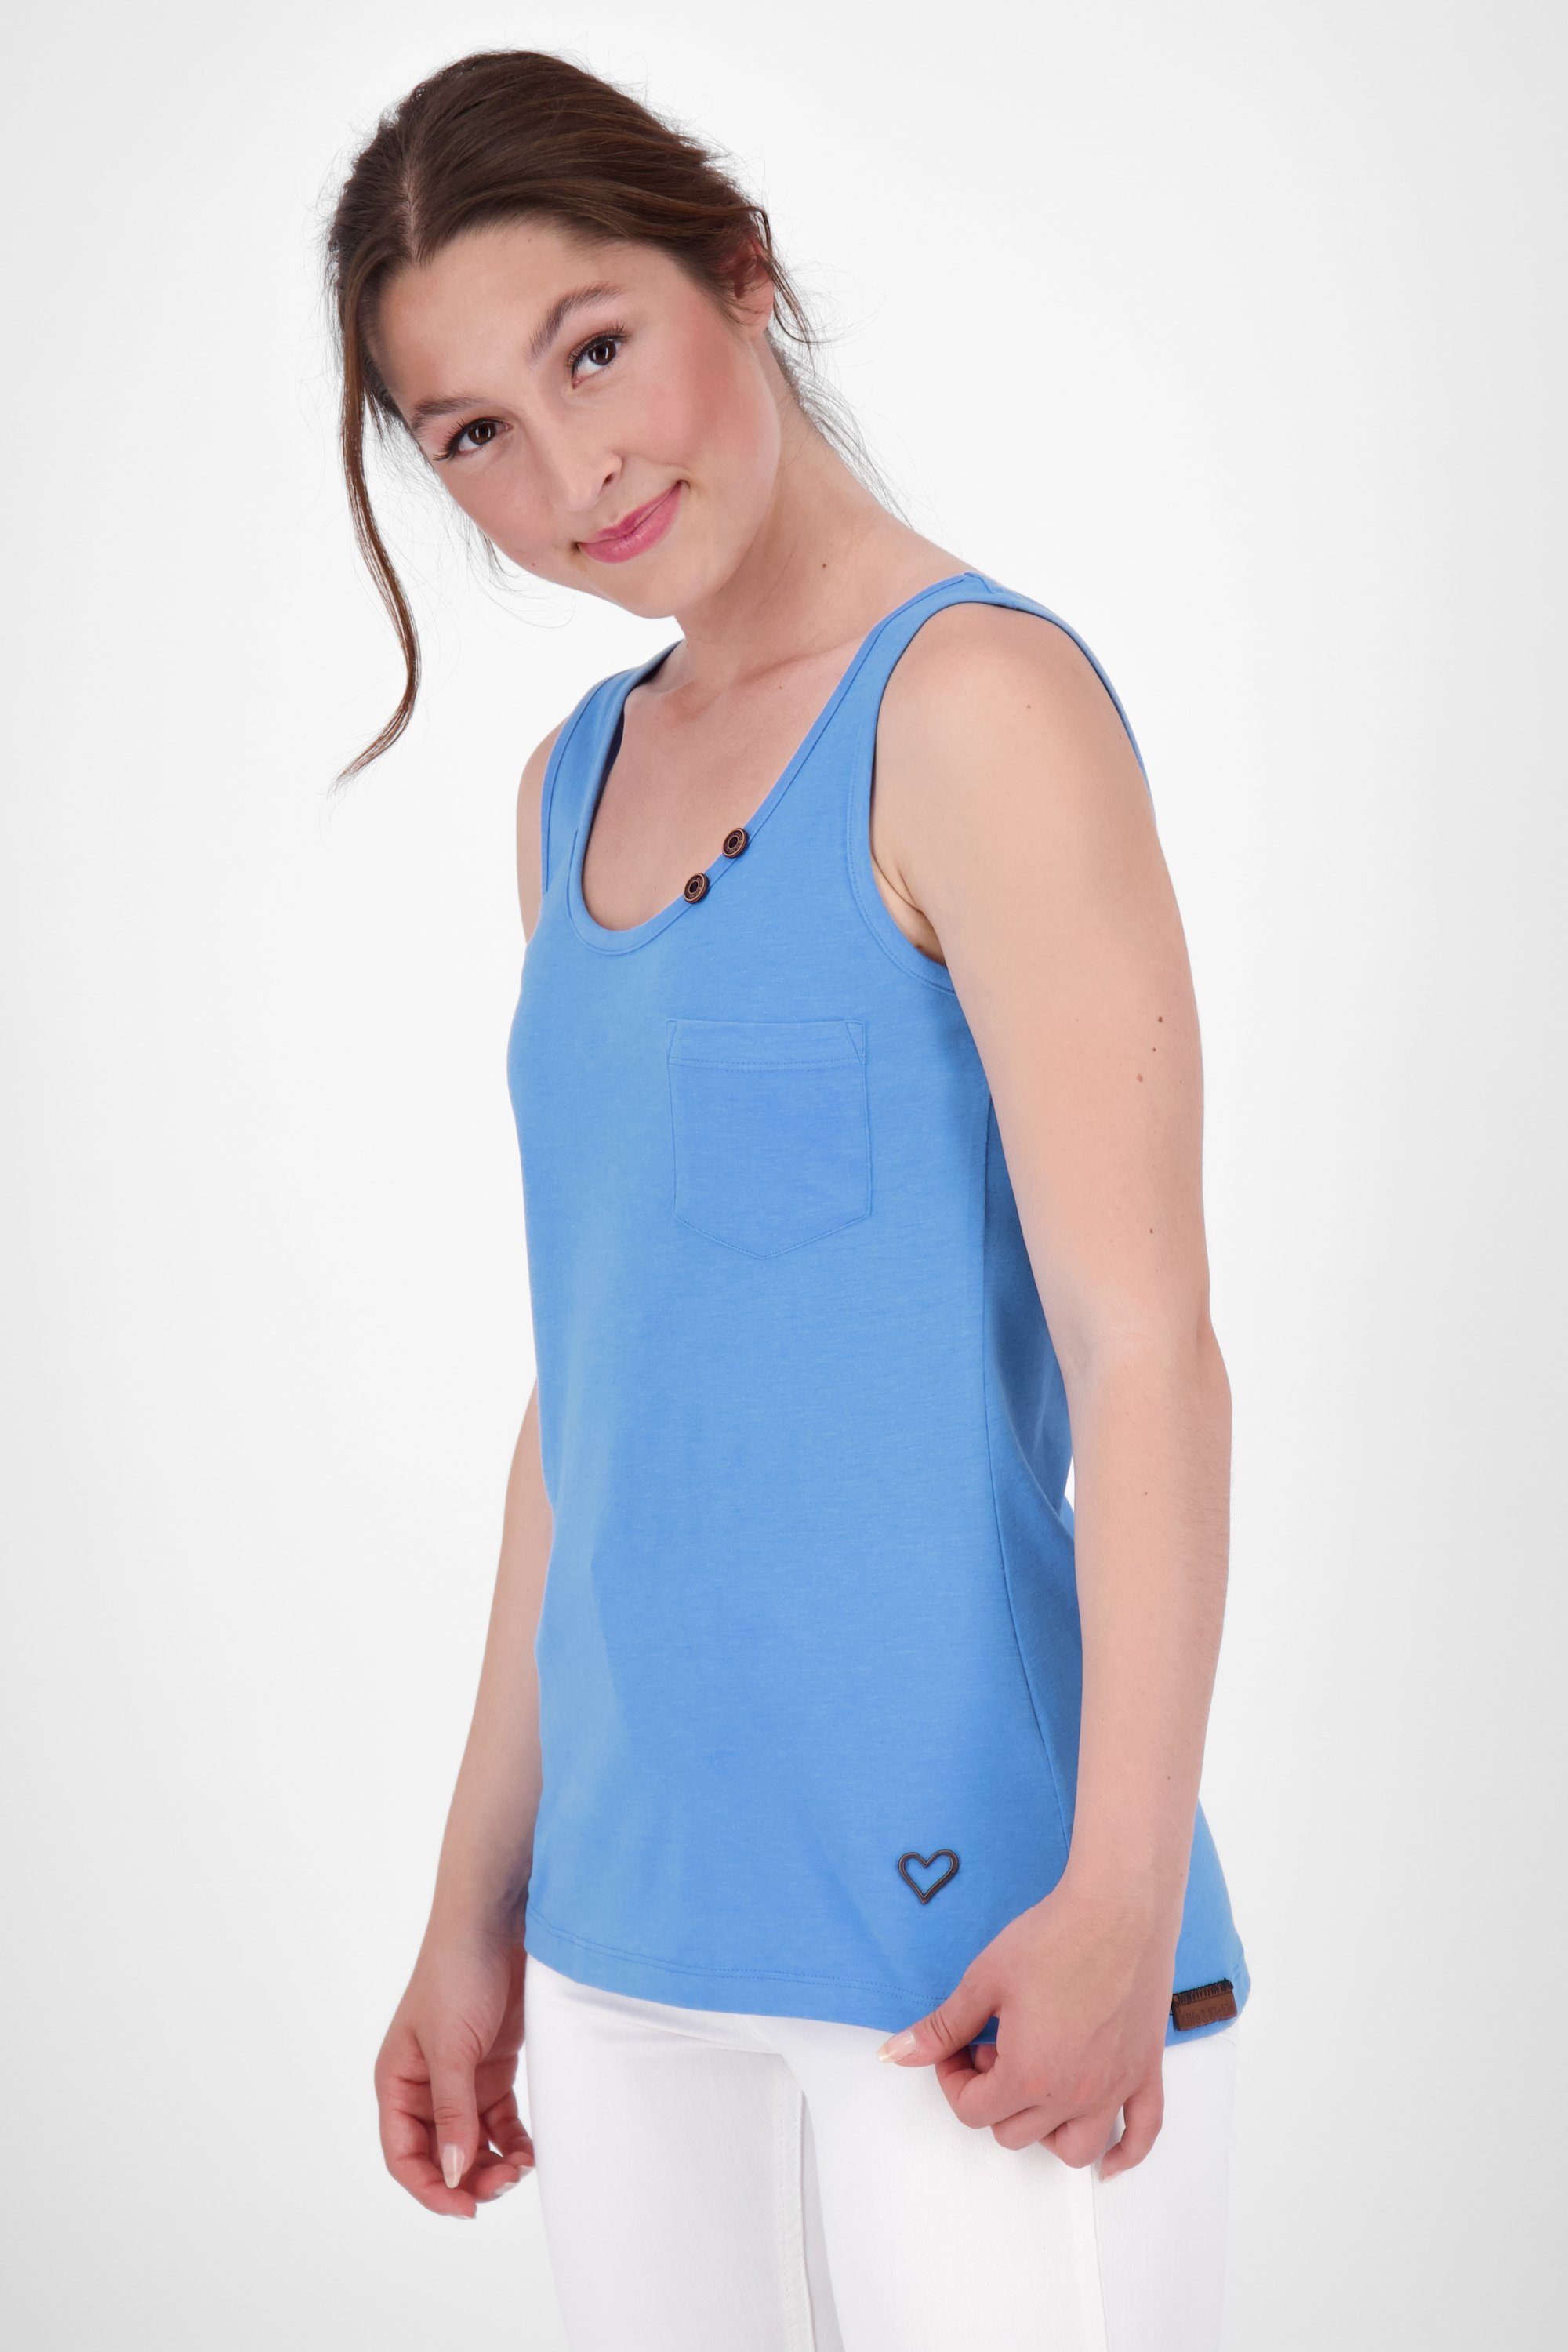 Alife & melange Damen T-Shirt Top Kickin azure JennyAK Tanktop, A Shirt